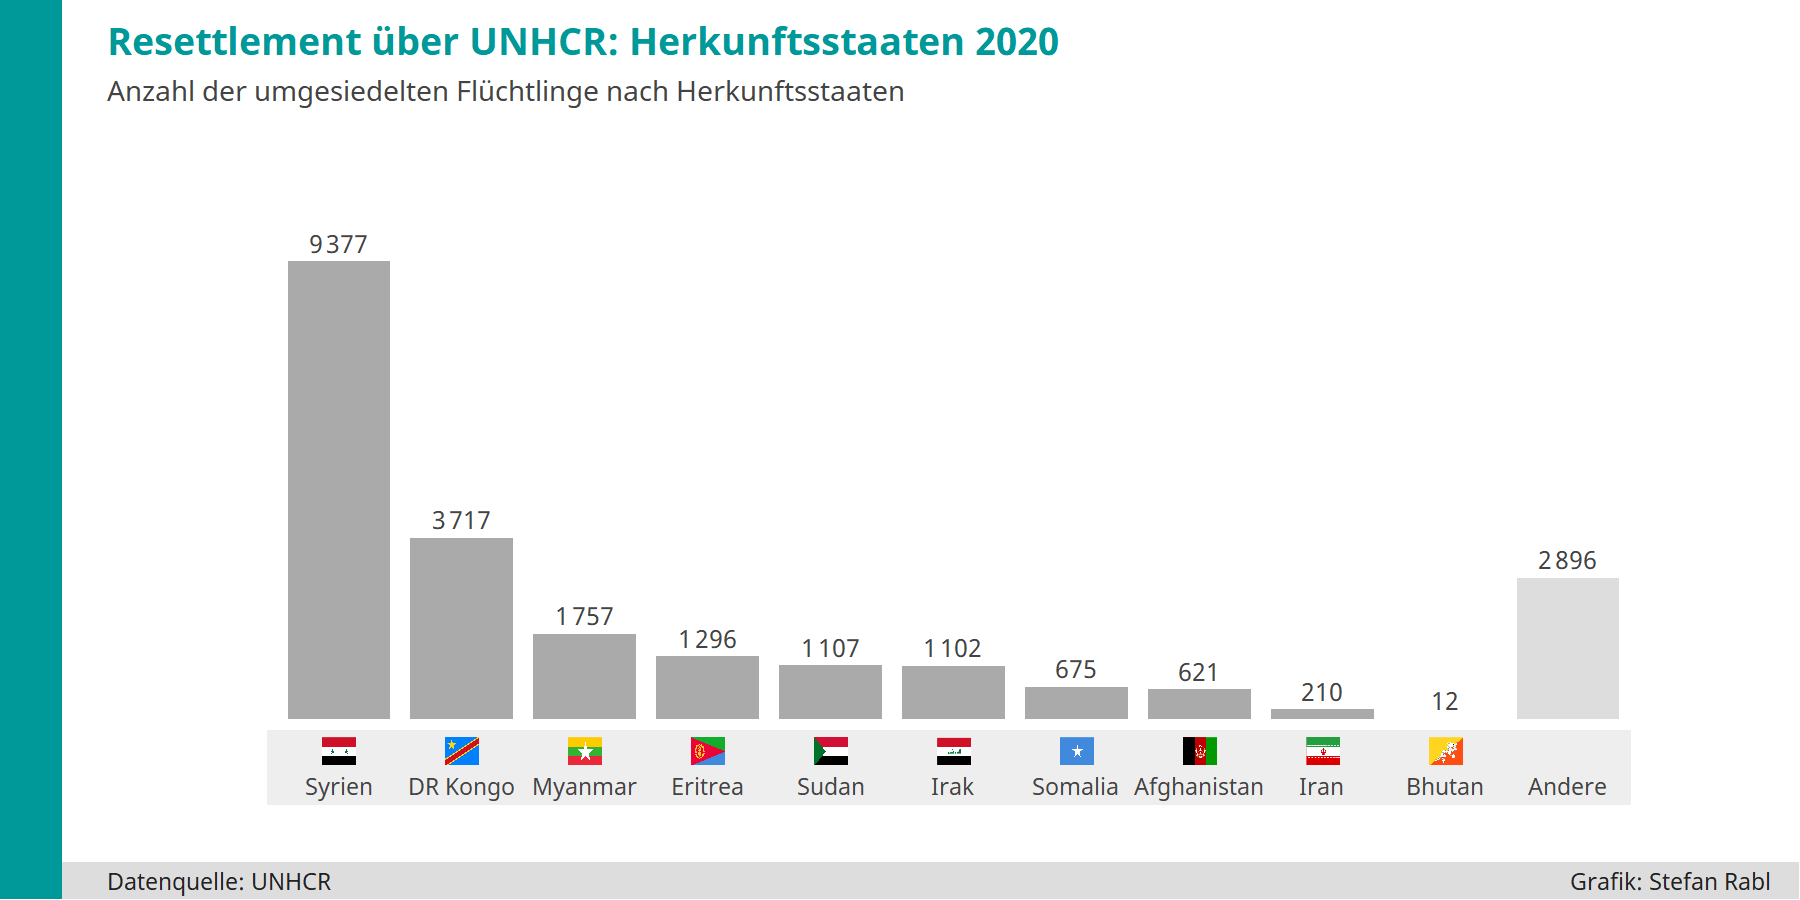 Grafik: Über Resettlement 2020 umgesiedelte Flüchtlinge nach Herkunftsstaaten